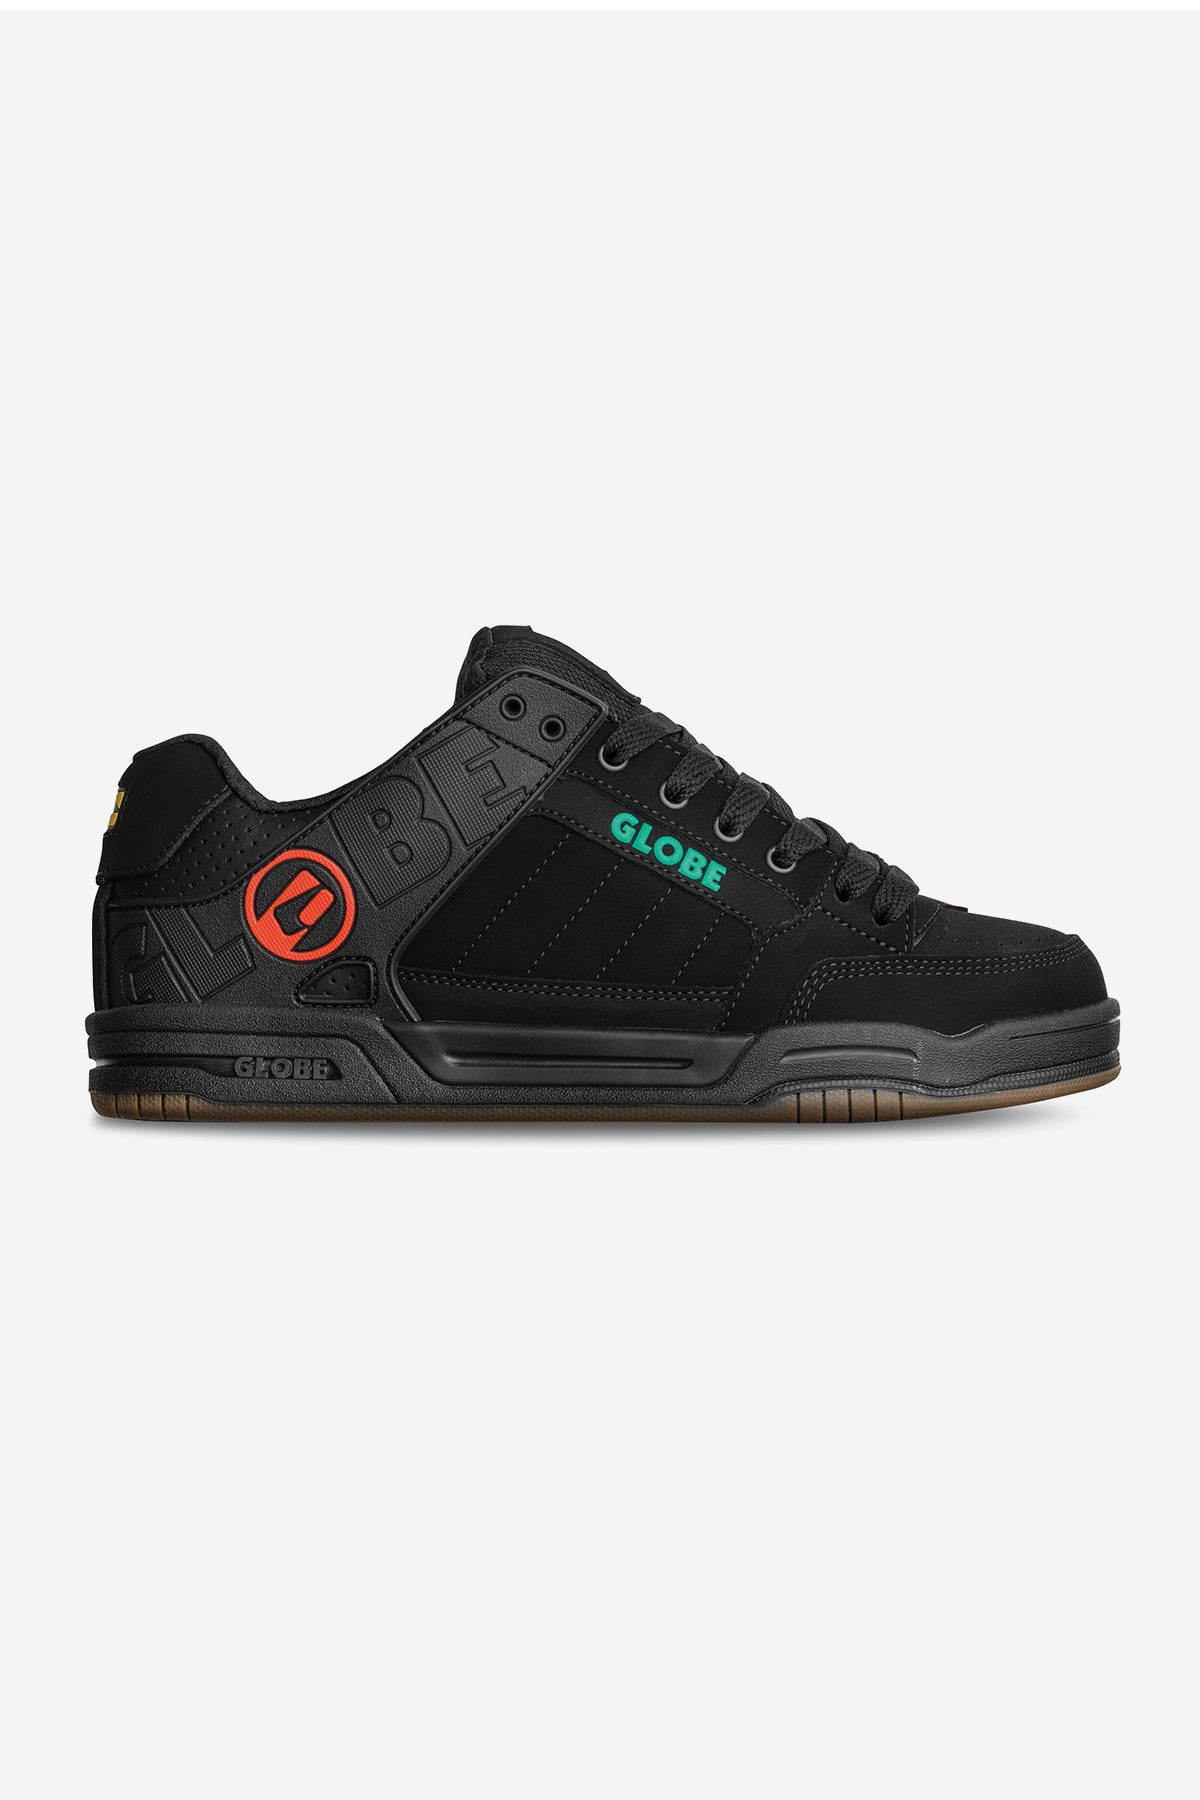 tilt black rasta skateboard zapatos